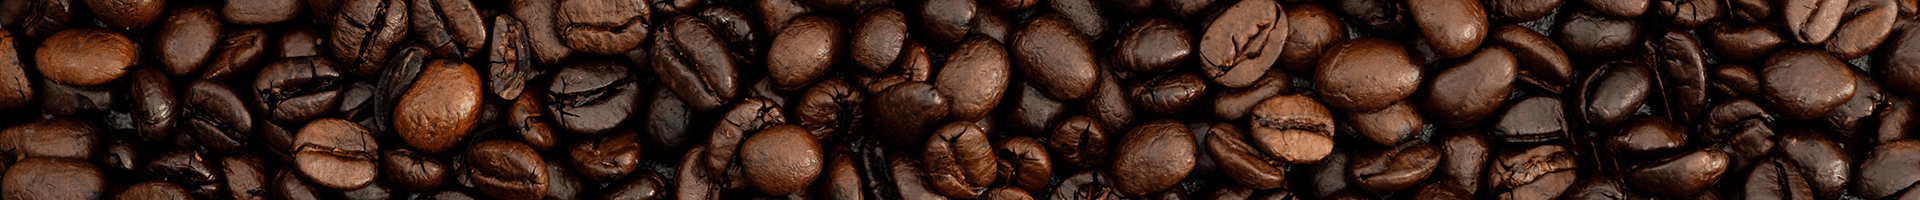 Bevande a base di caffè e cacao